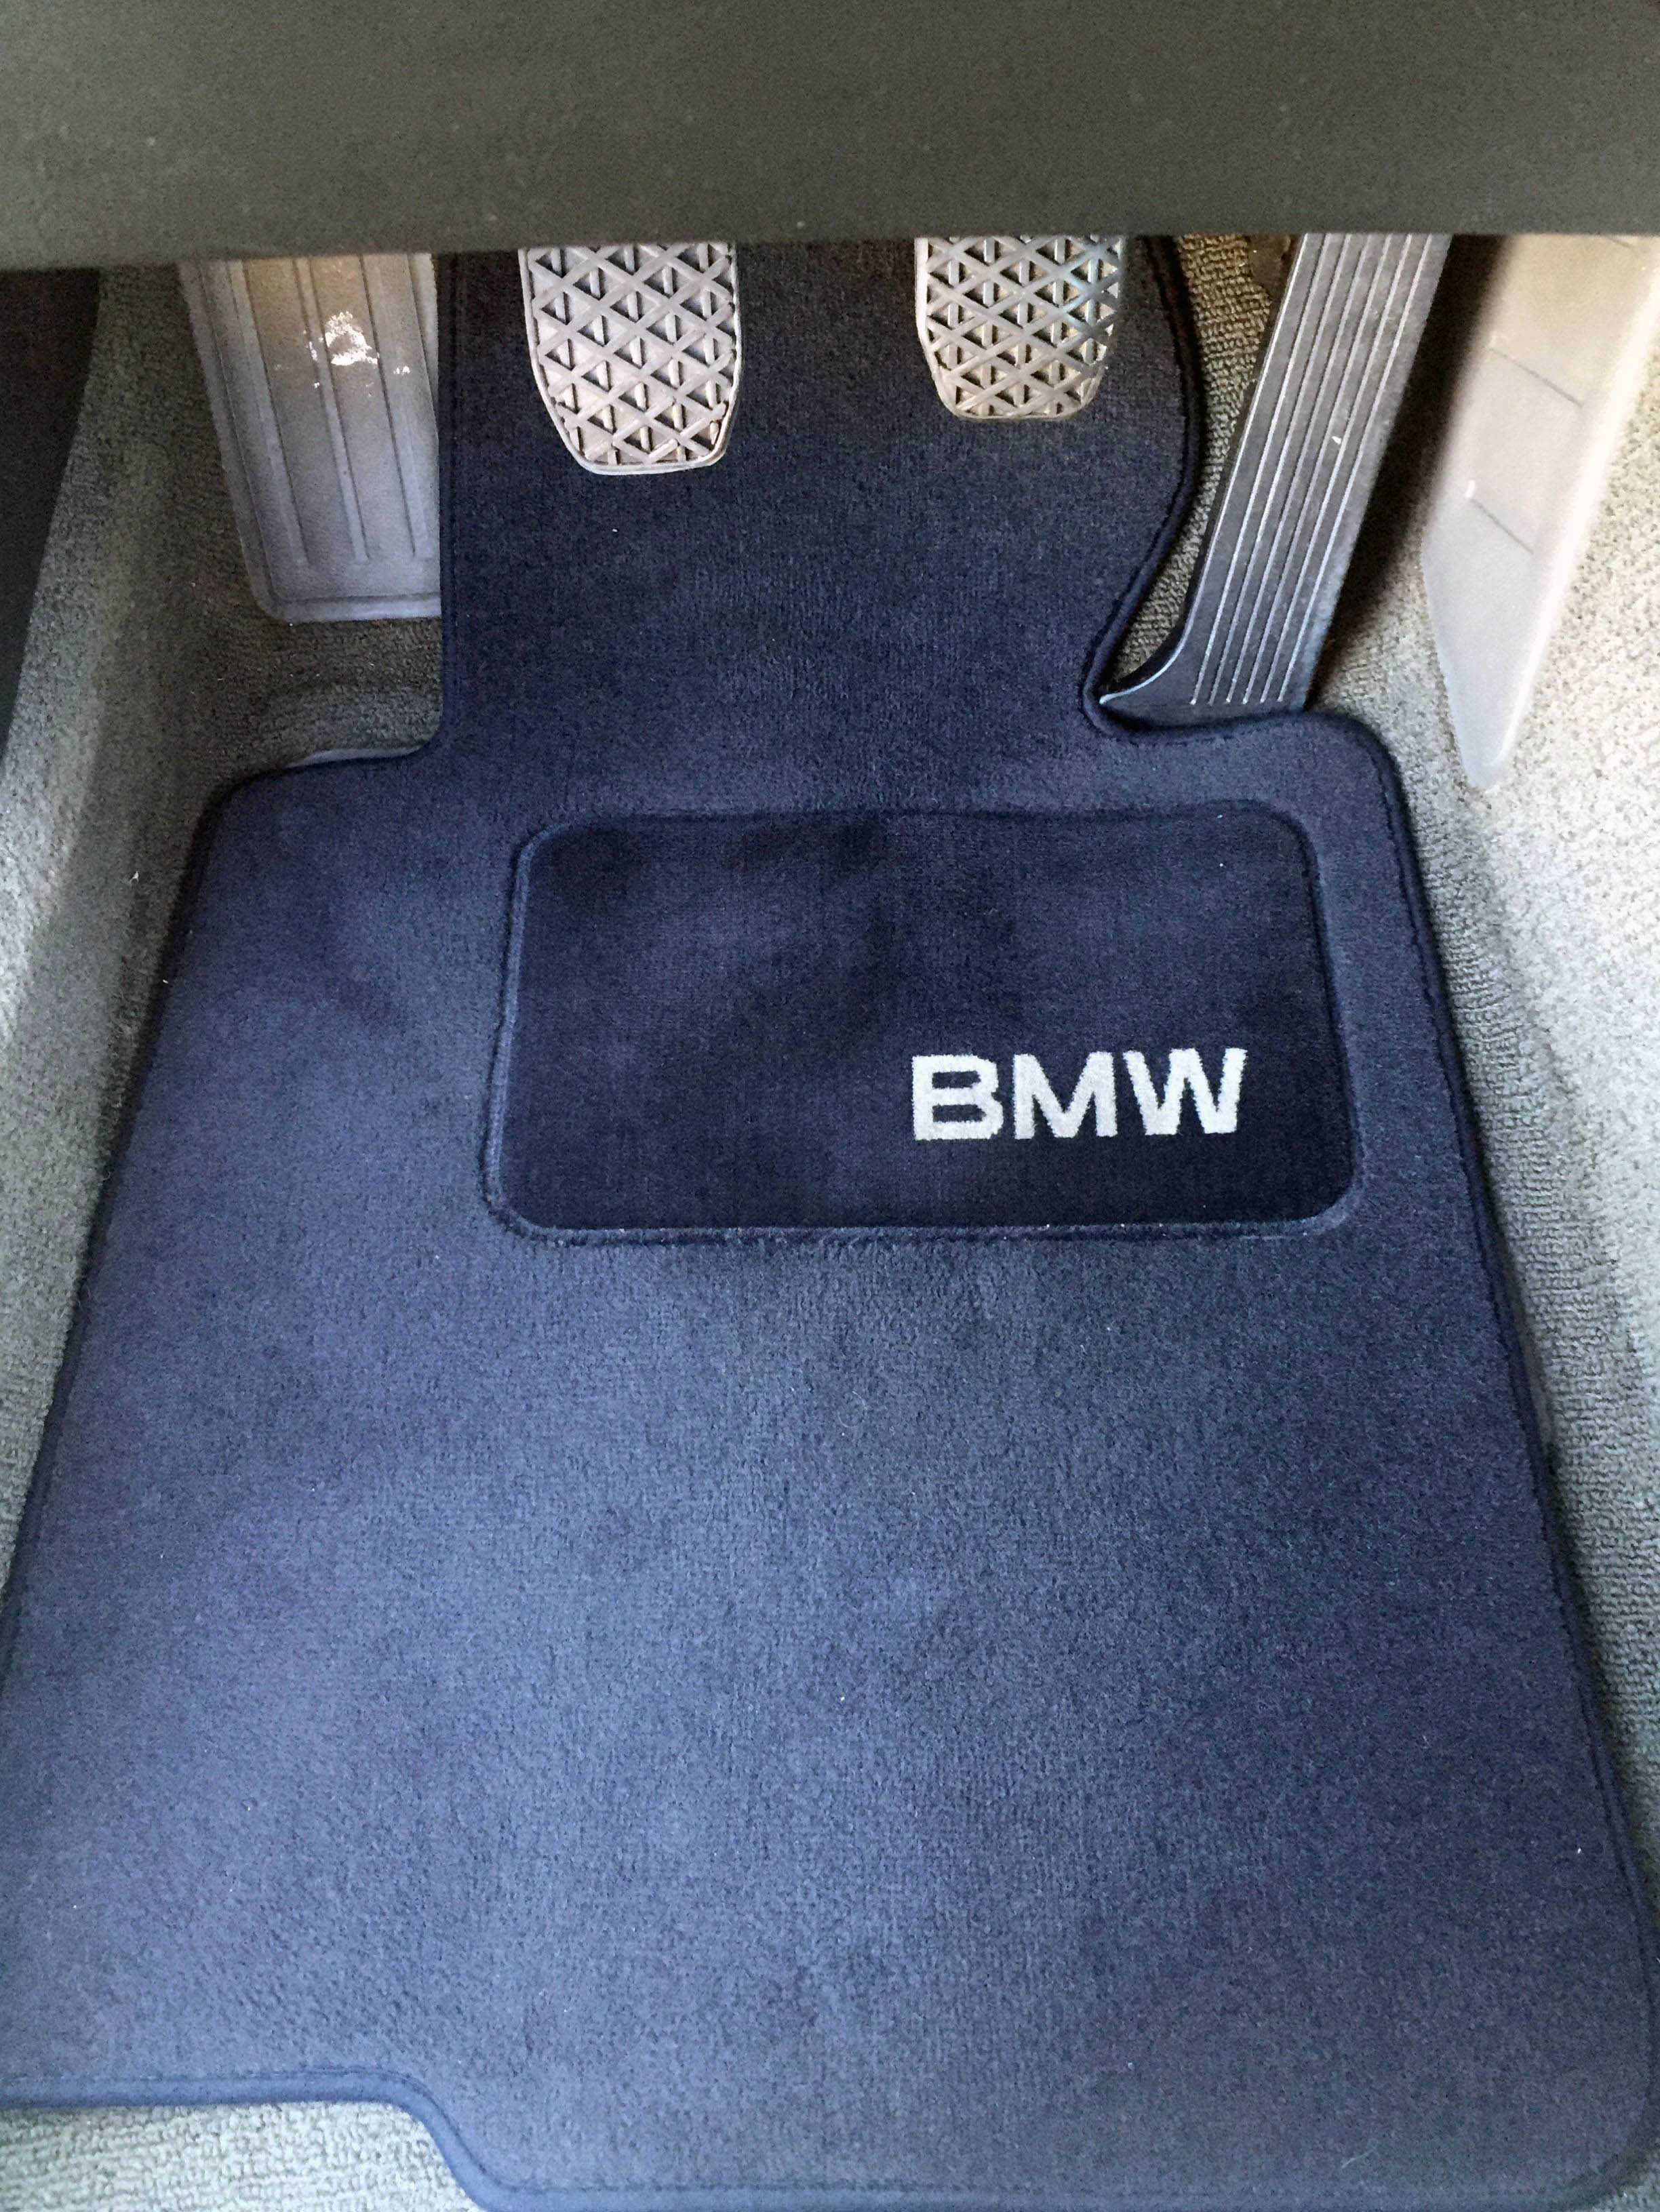 Discontinued OEM BMW E30 floor mats option - BIMMERtips.com